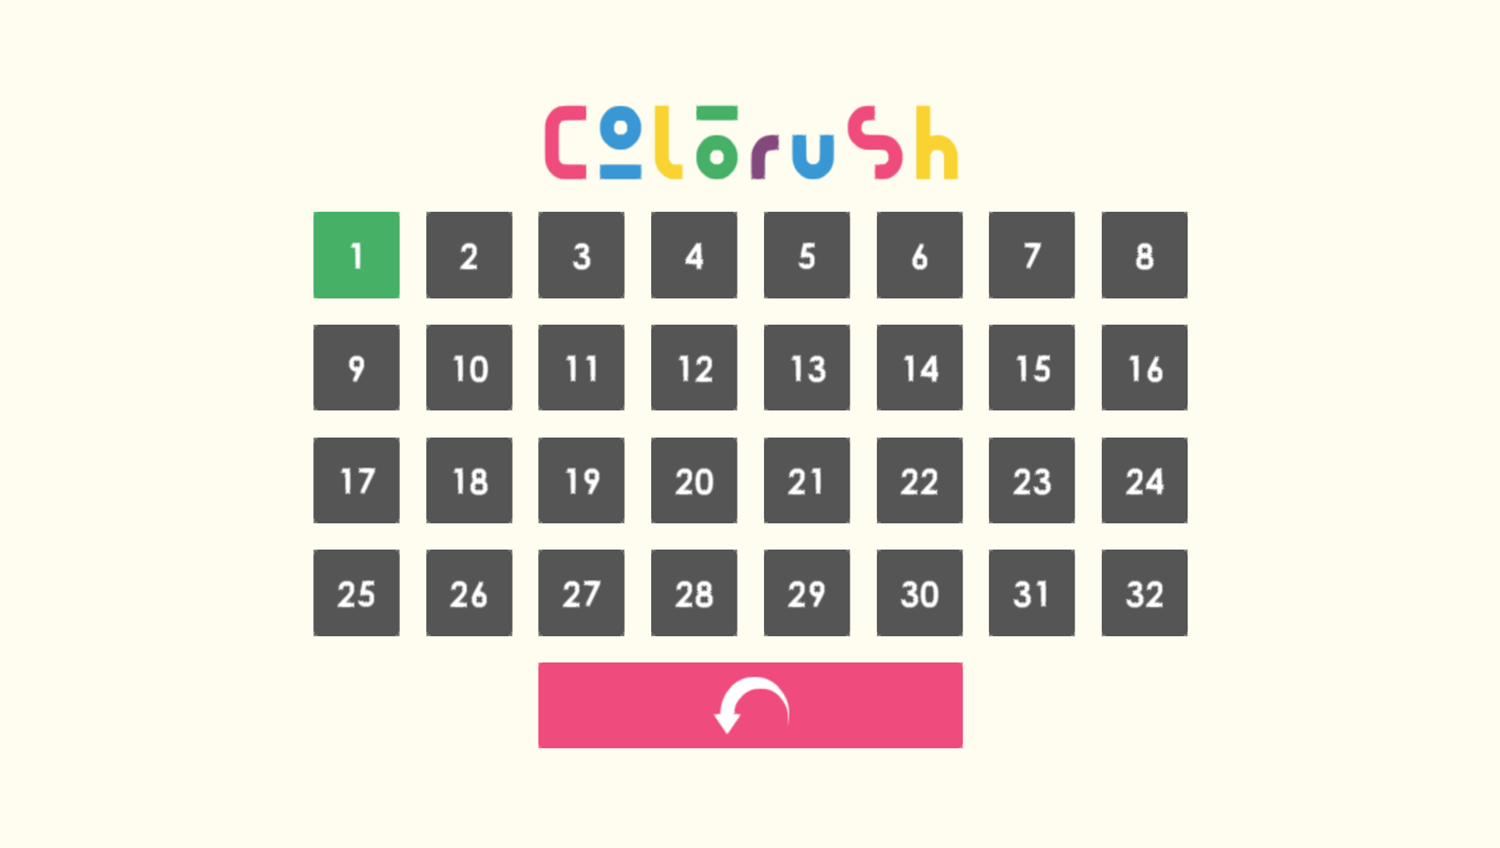 Colorush Game Level Select Screenshot.